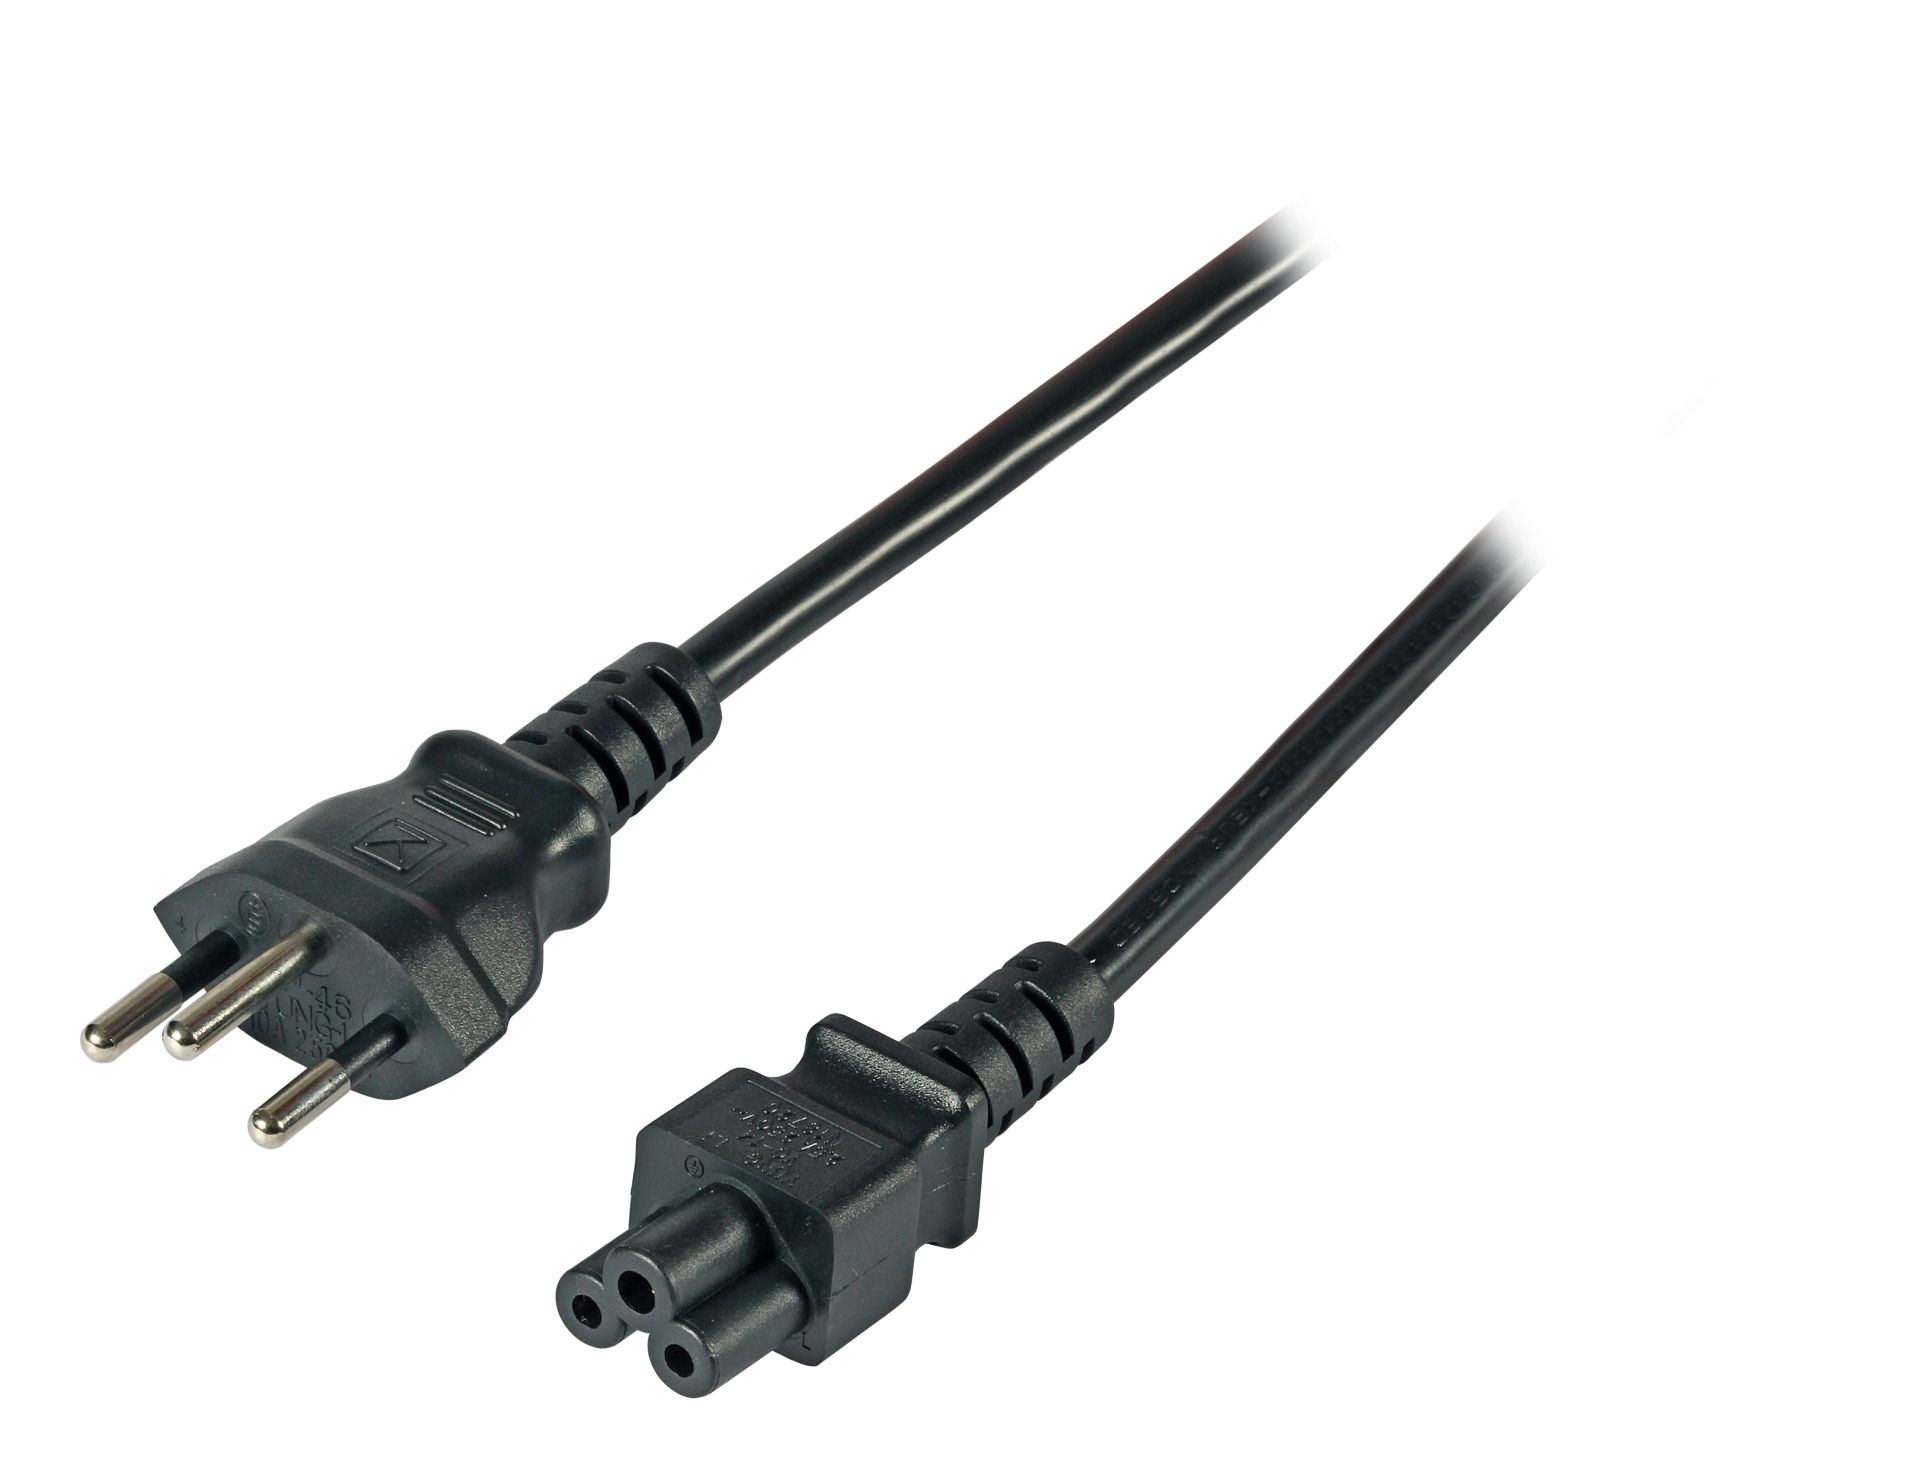 Power Cable Switzerland Type 12 - C5 180°, Black, 1.8 m, 3 x 0.75 mm²